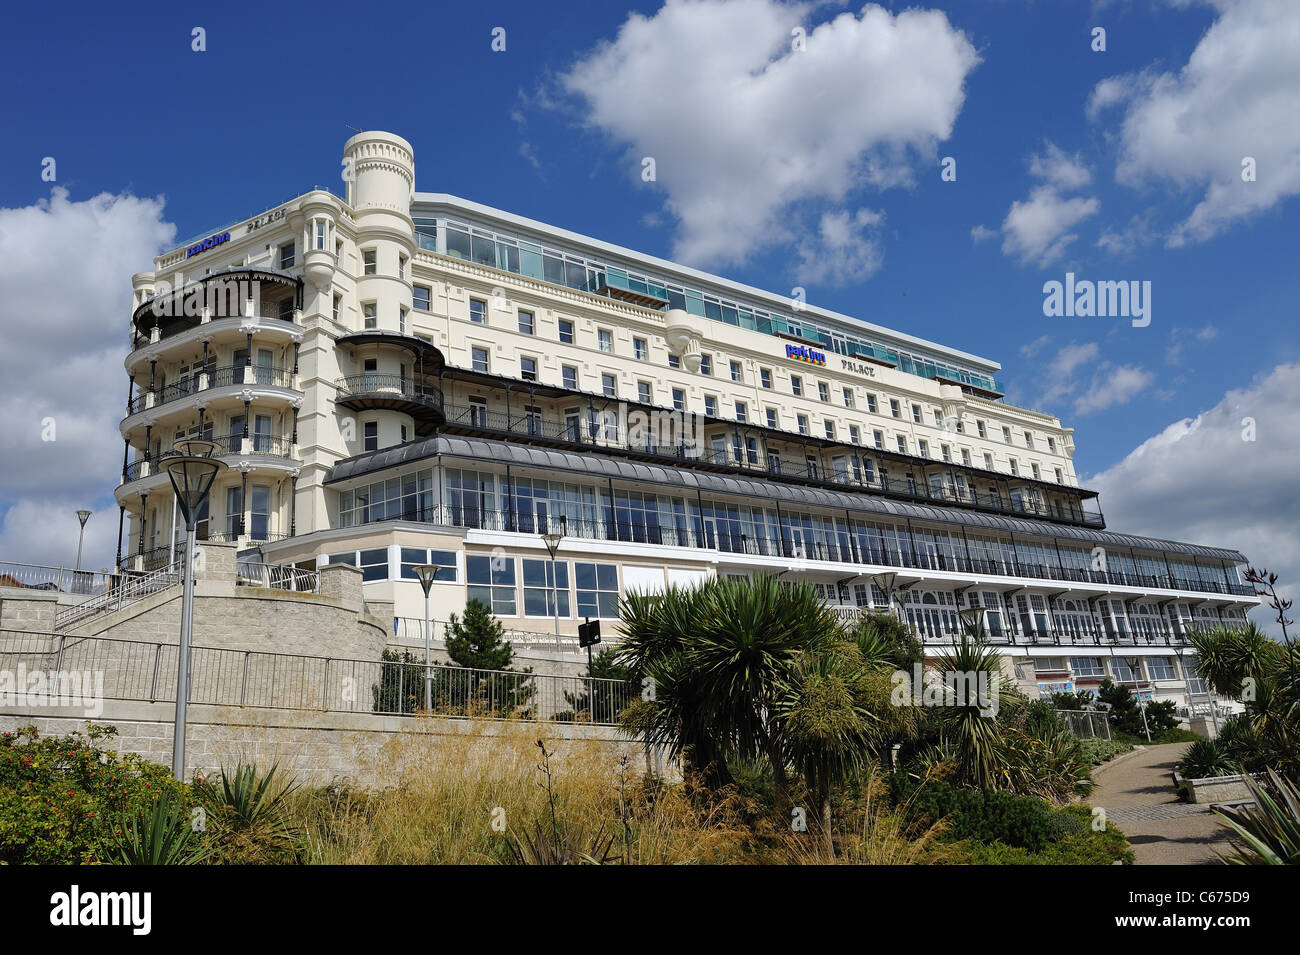 L'ex Palace Hotel Il Park Inn by Radisson Palace Southend on Sea Foto Stock